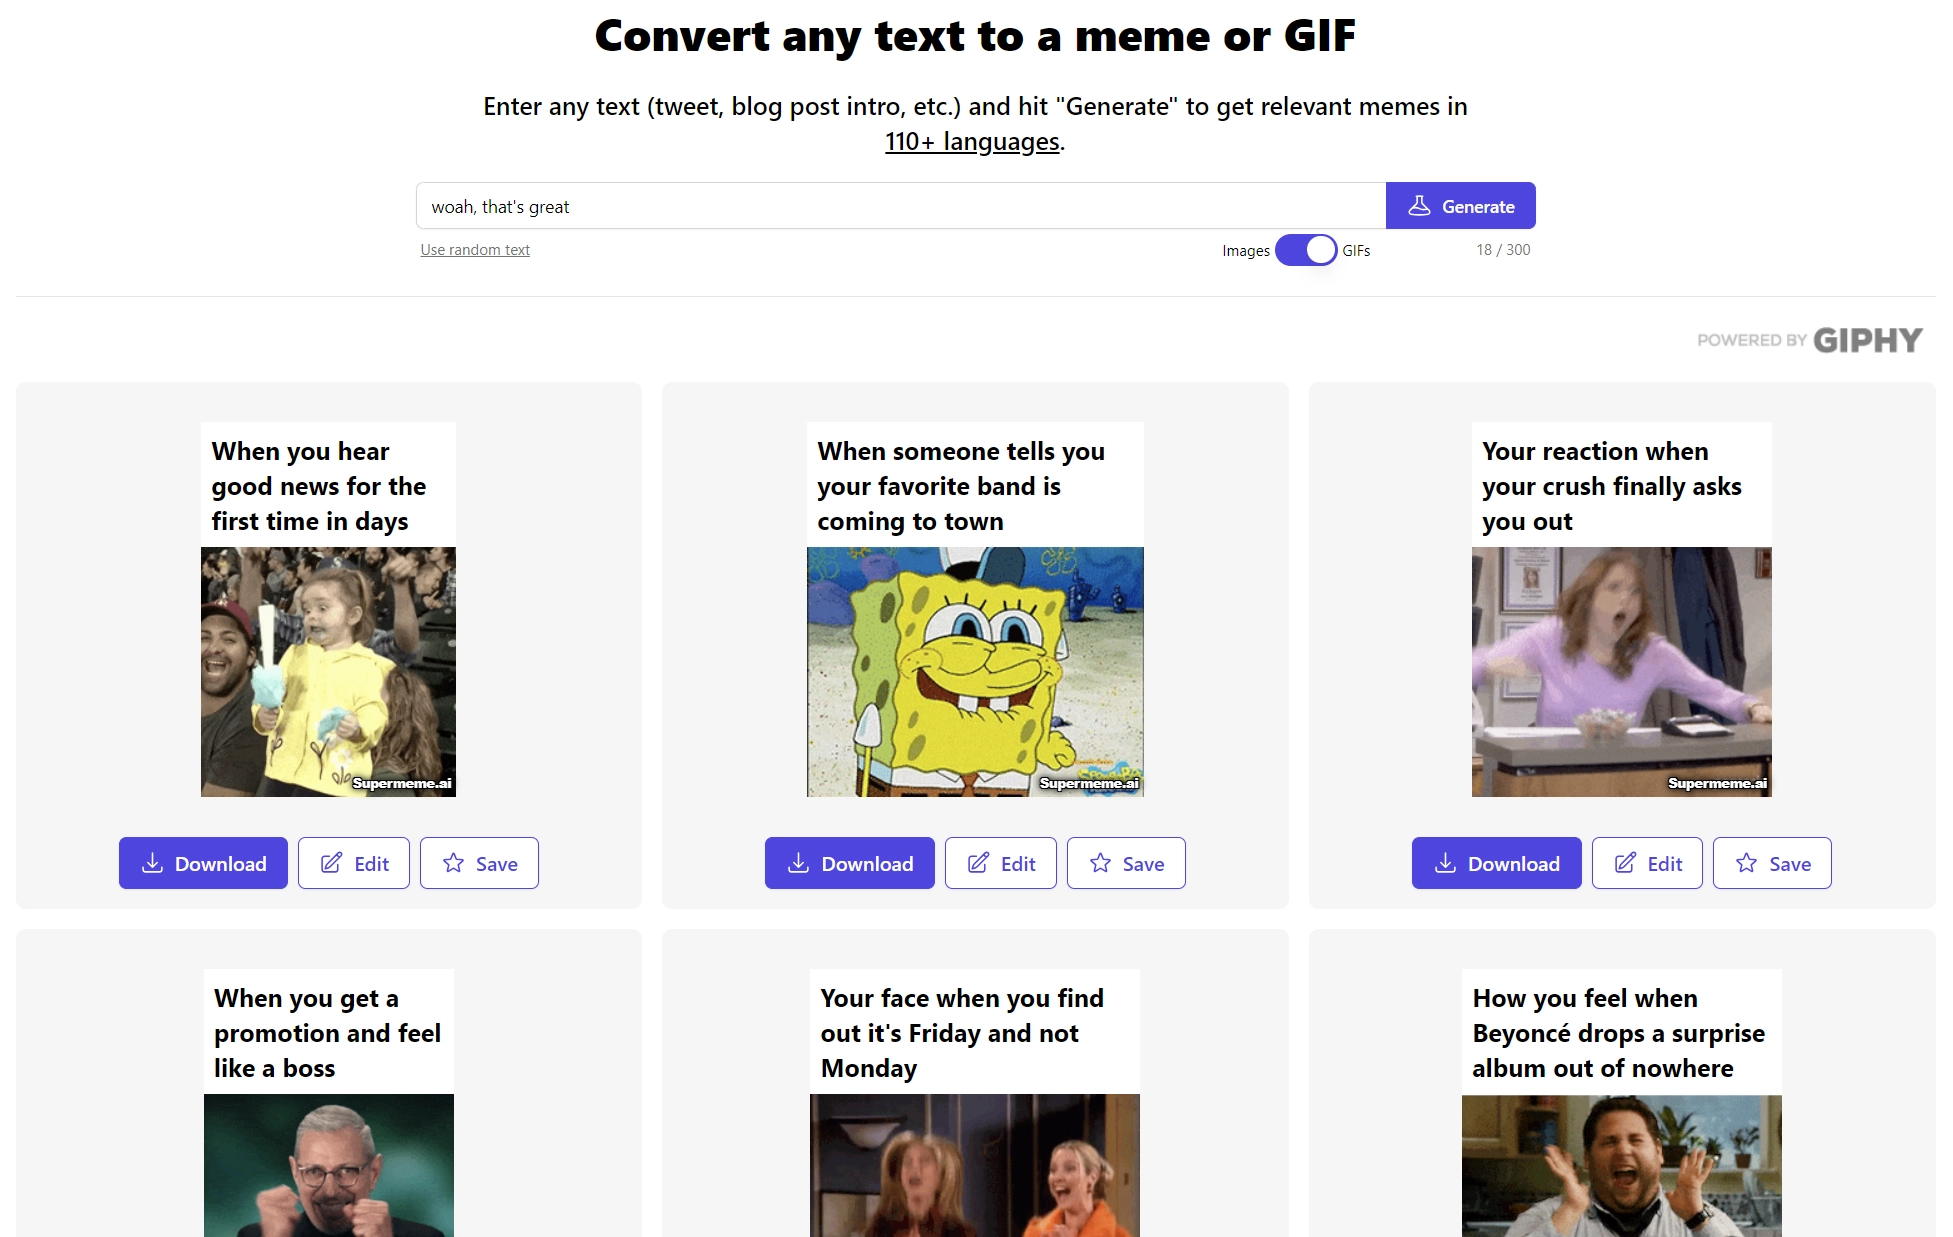 How to Use AI Meme Generator Free to Make Funny Memes